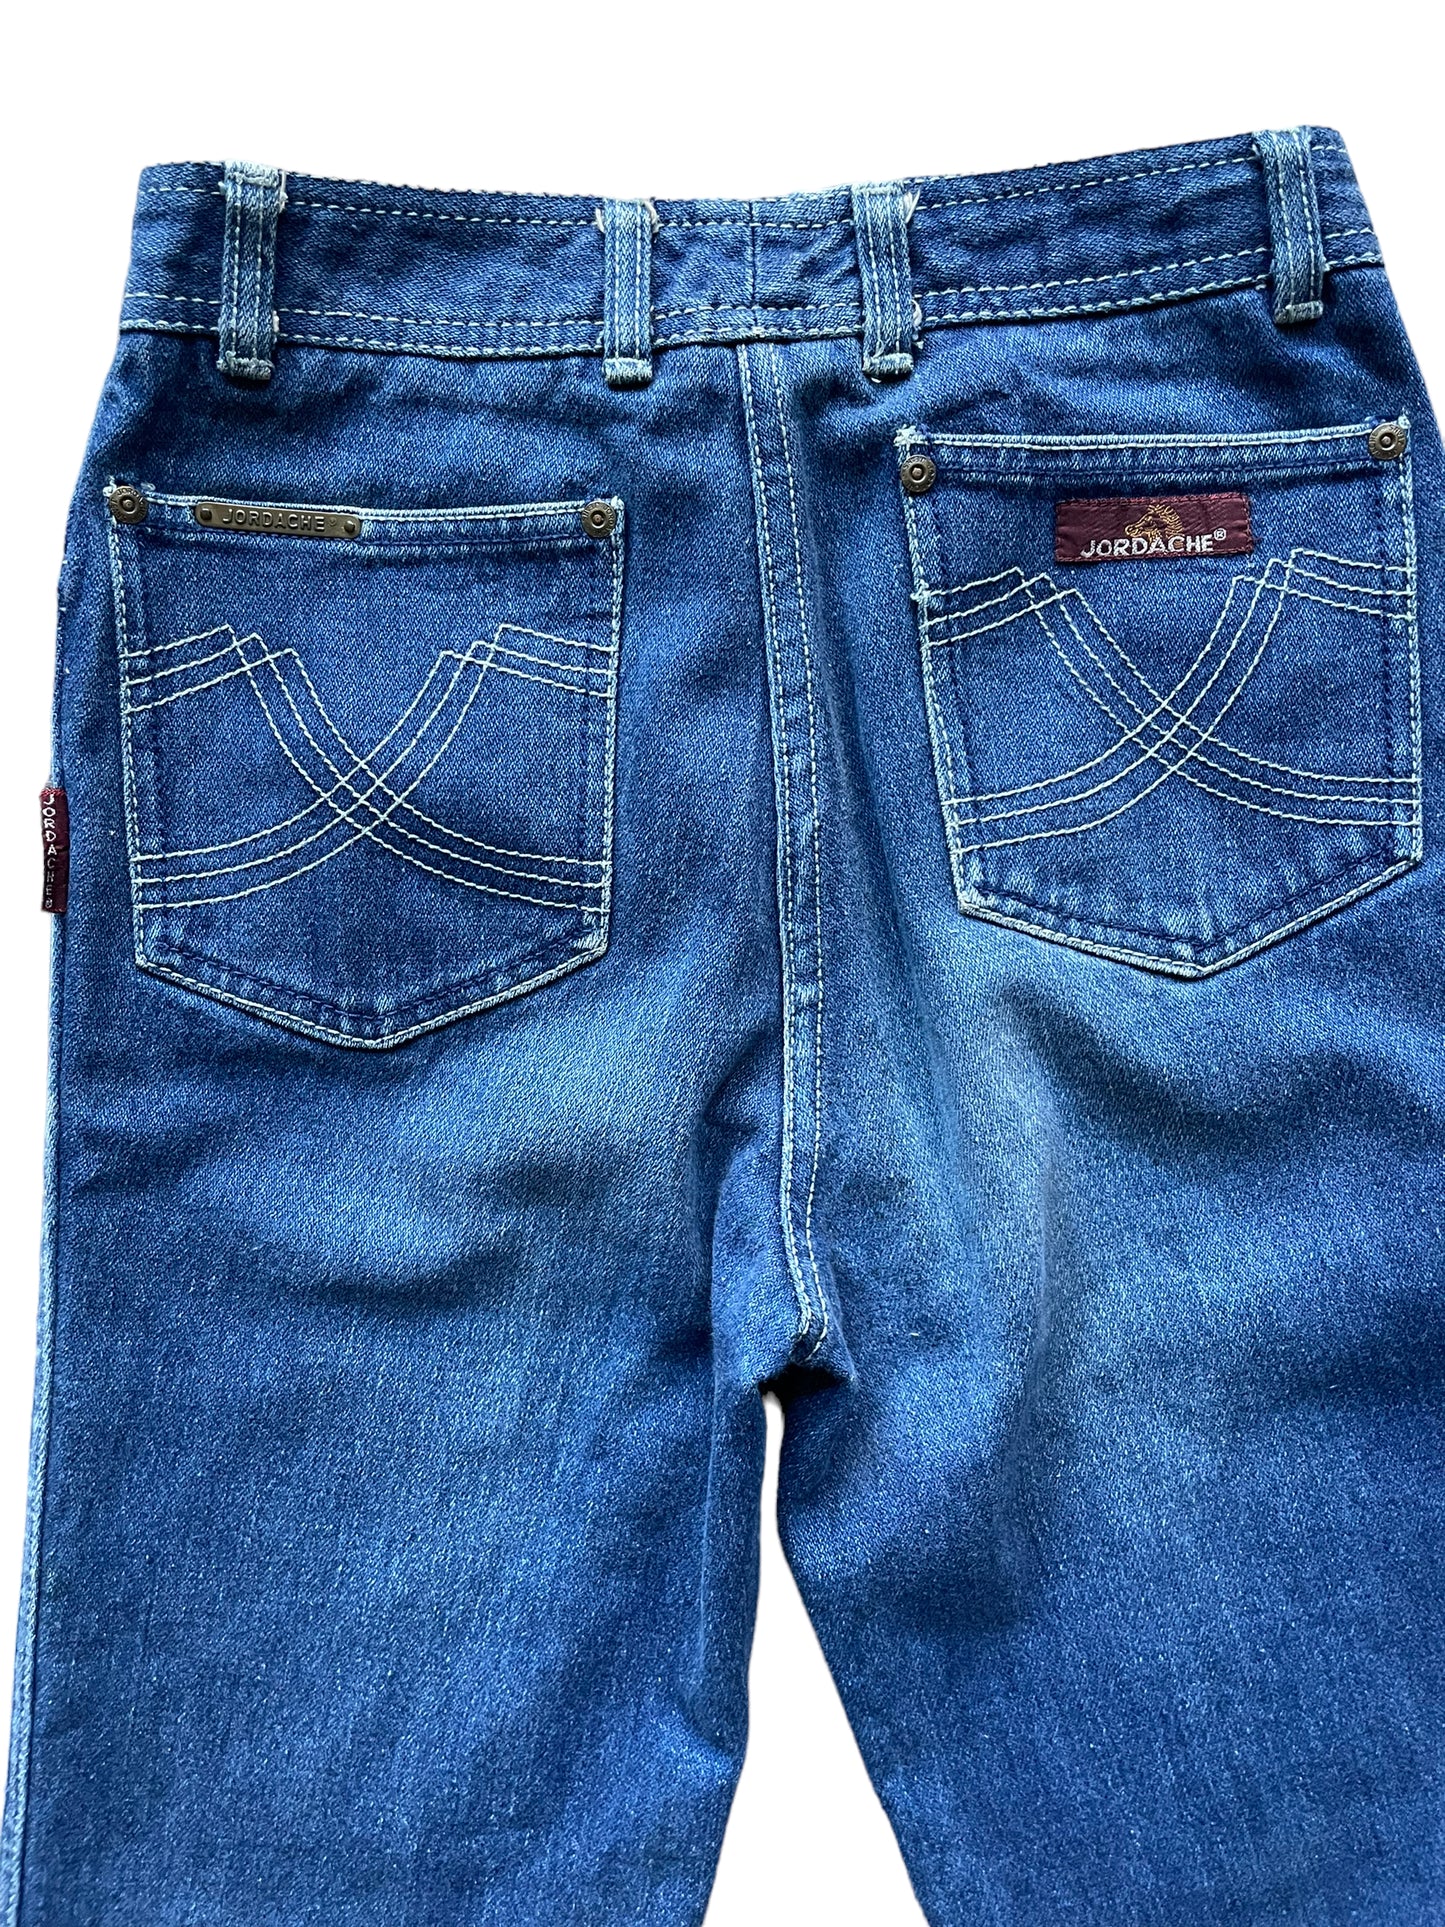 Back pockets view of Vintage 1980s Jordache Jeans Sz SM 